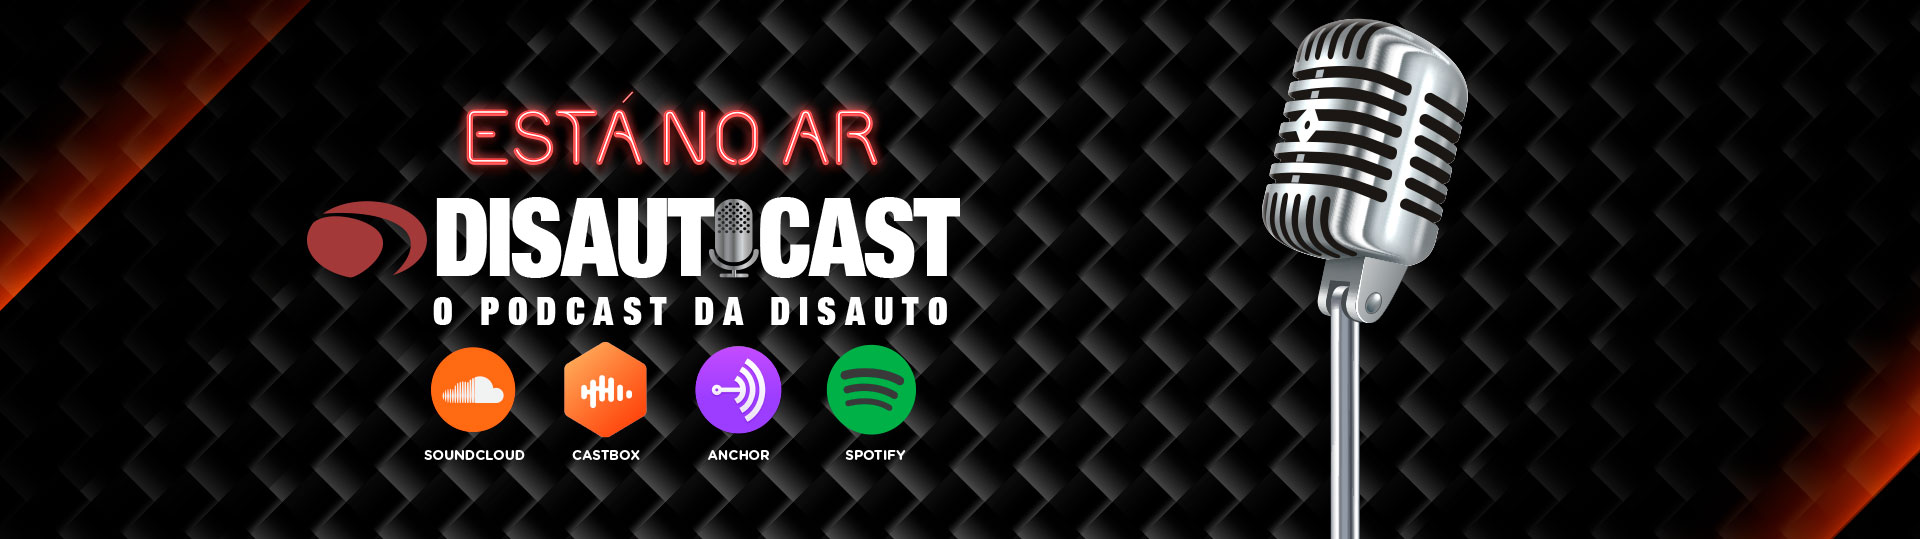 Disautocast o podcast da Disauto